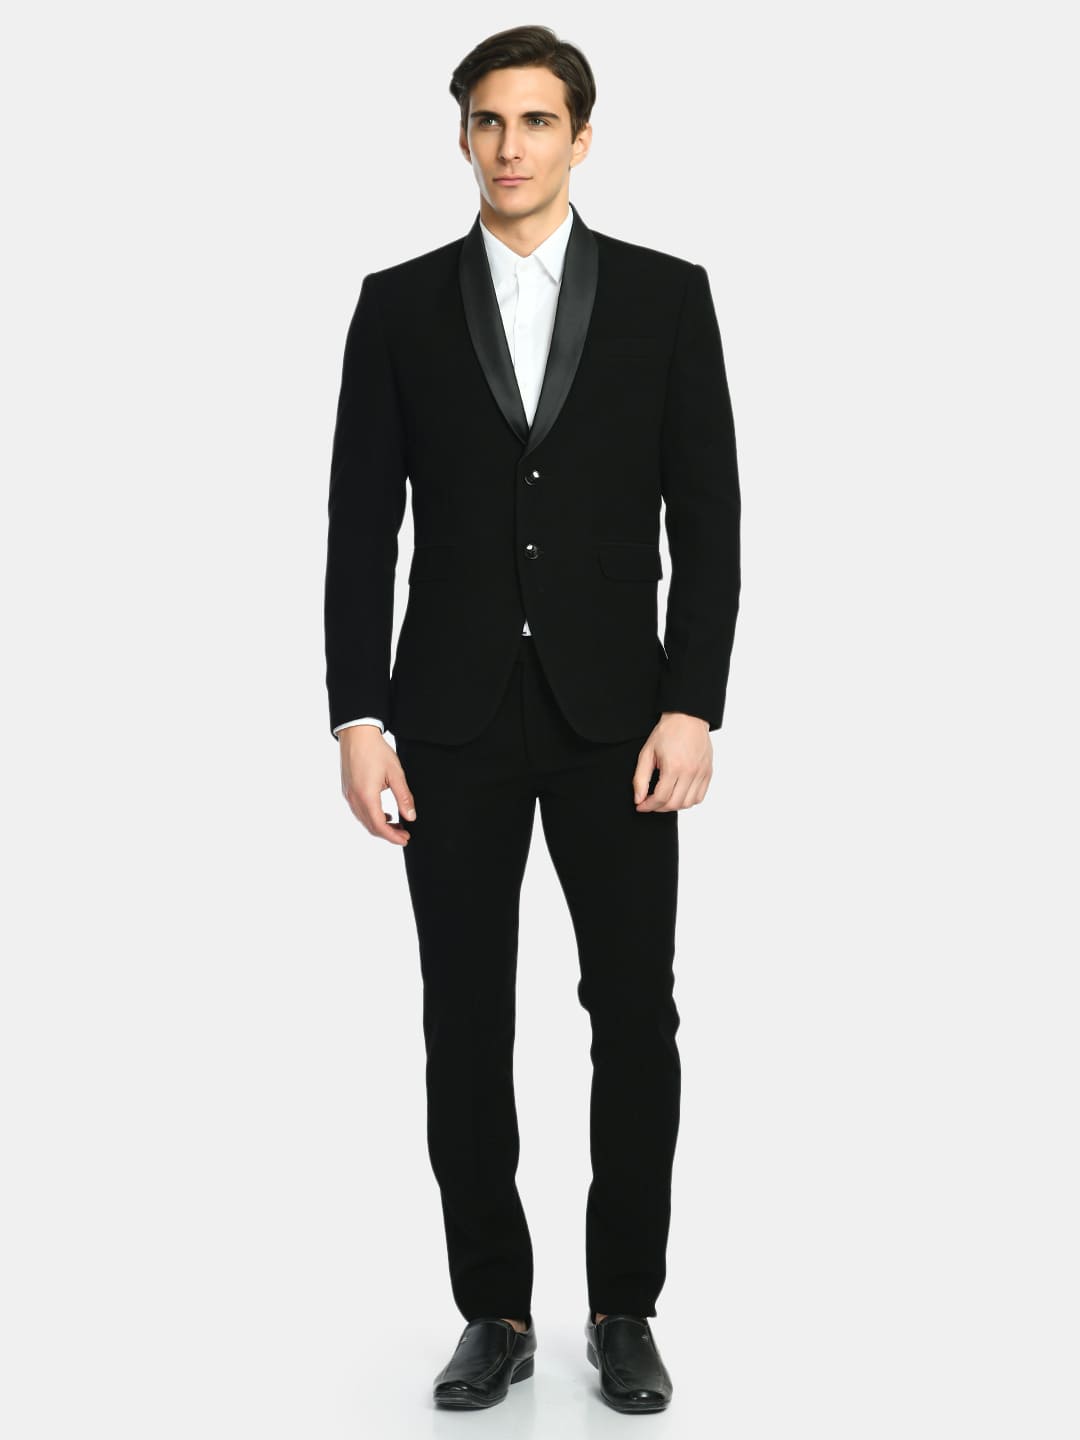 Flaunt in Bold, Black Tuxedo Suit